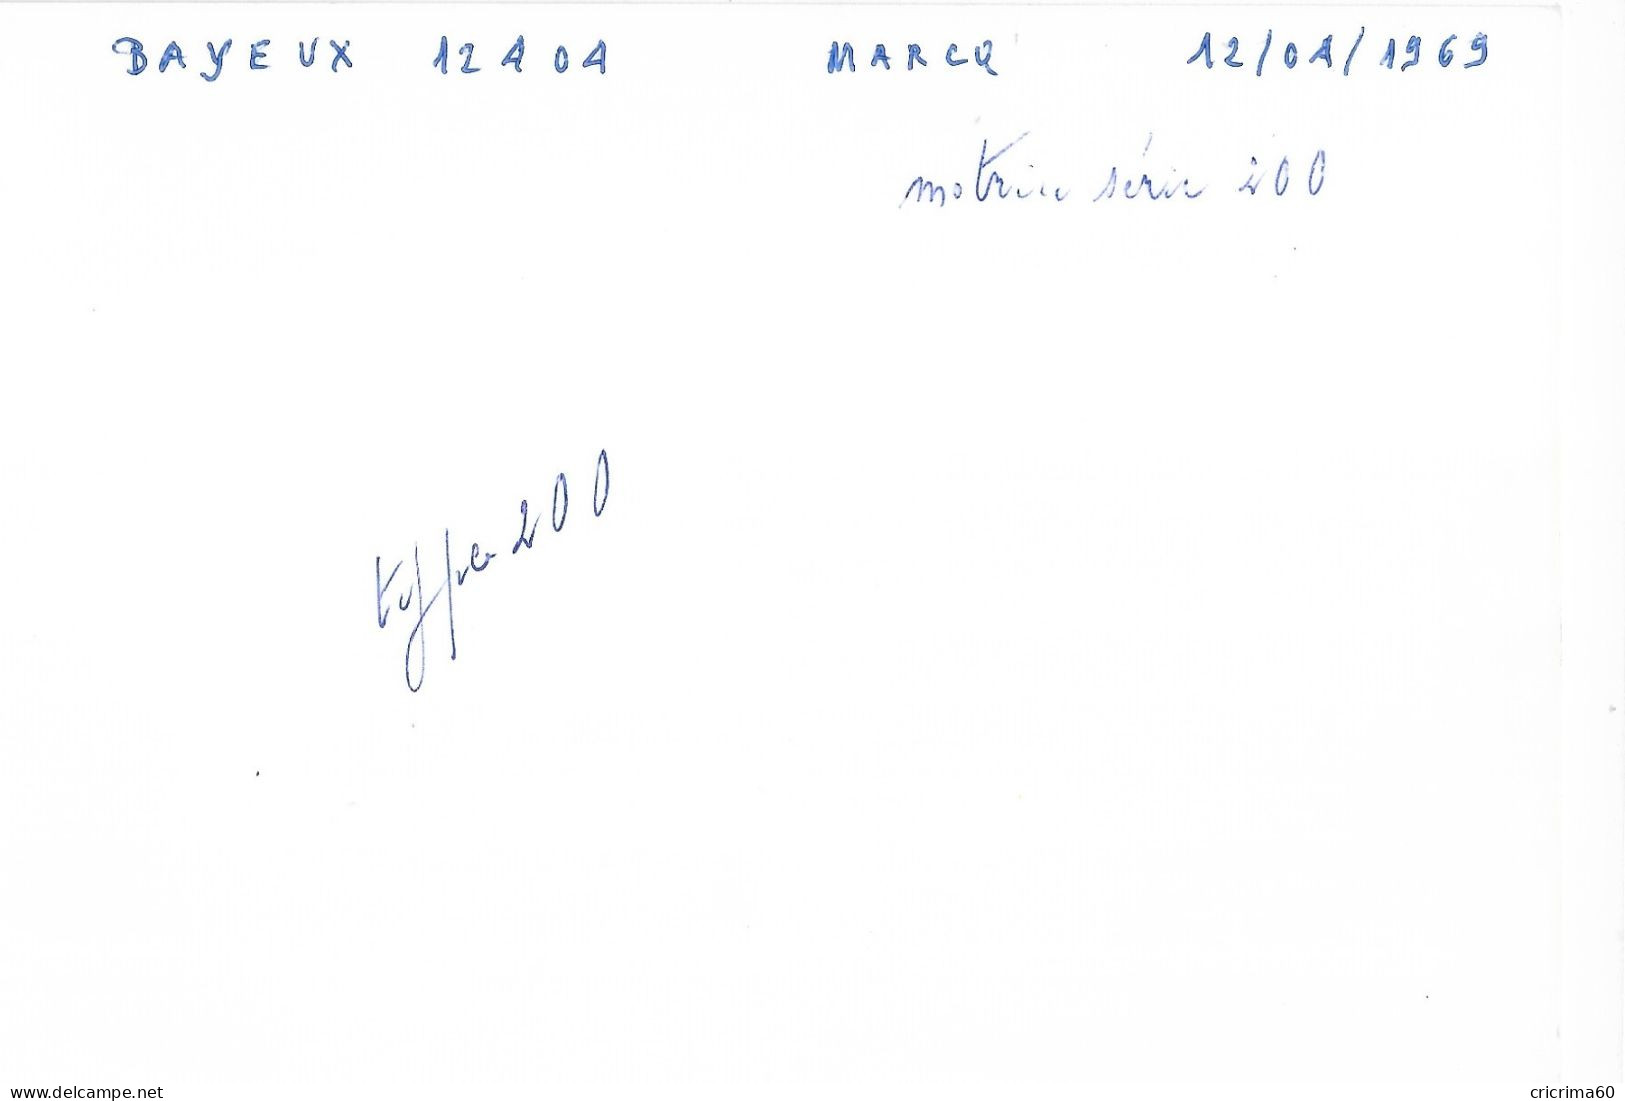 59 - MARCQ. Tramway Motrice Série 200 Bayeux 12404. Datée 12/04/1969. TBE (15 X 10 Cm) - Europe